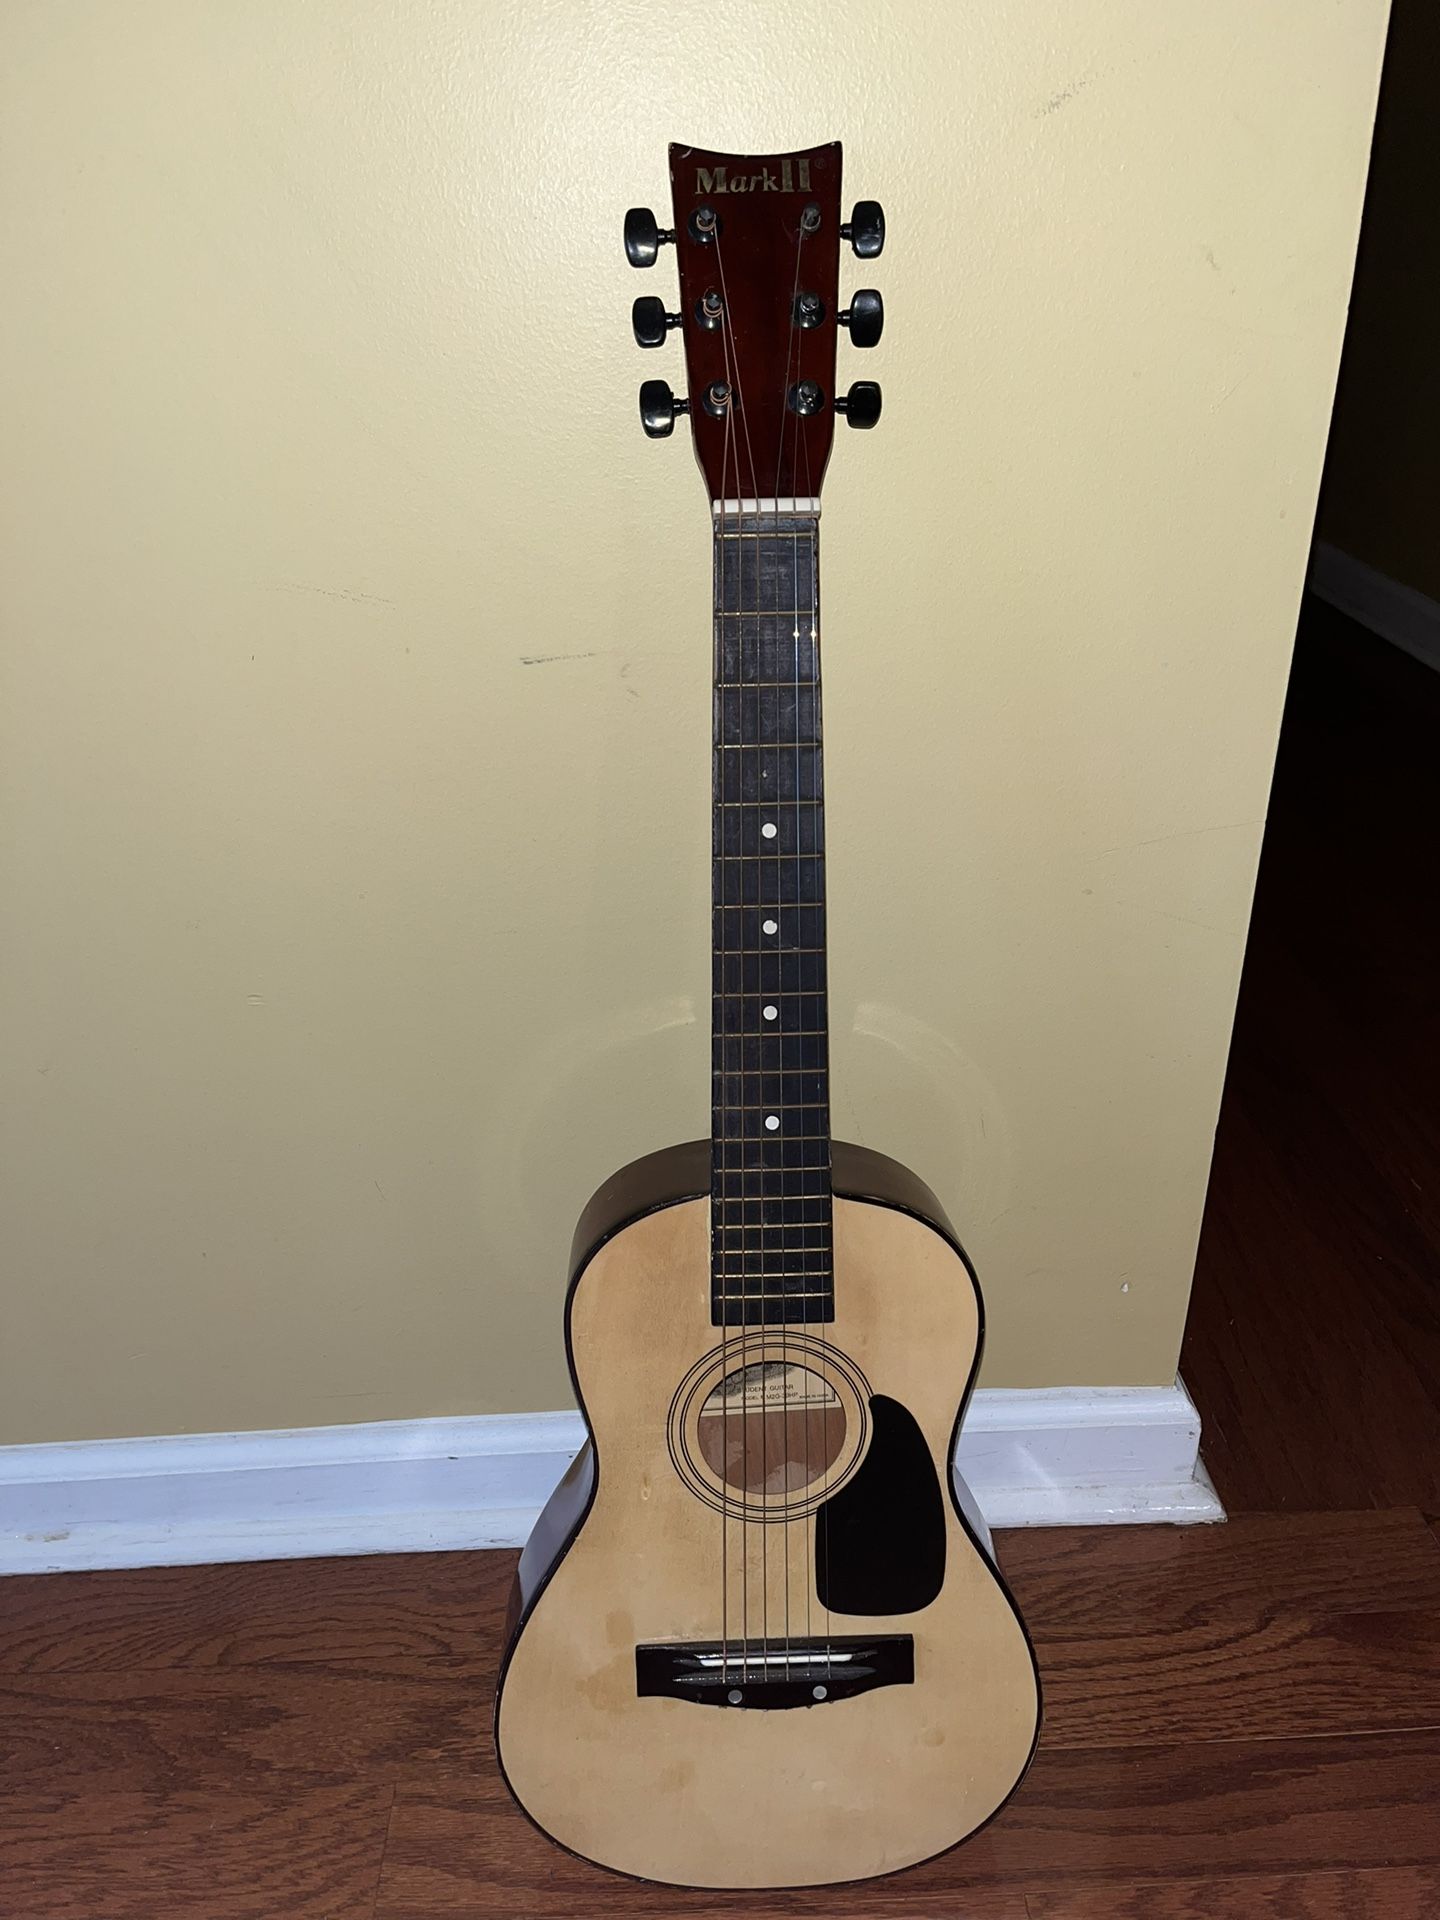 Mark II Acoustic Student Guitar